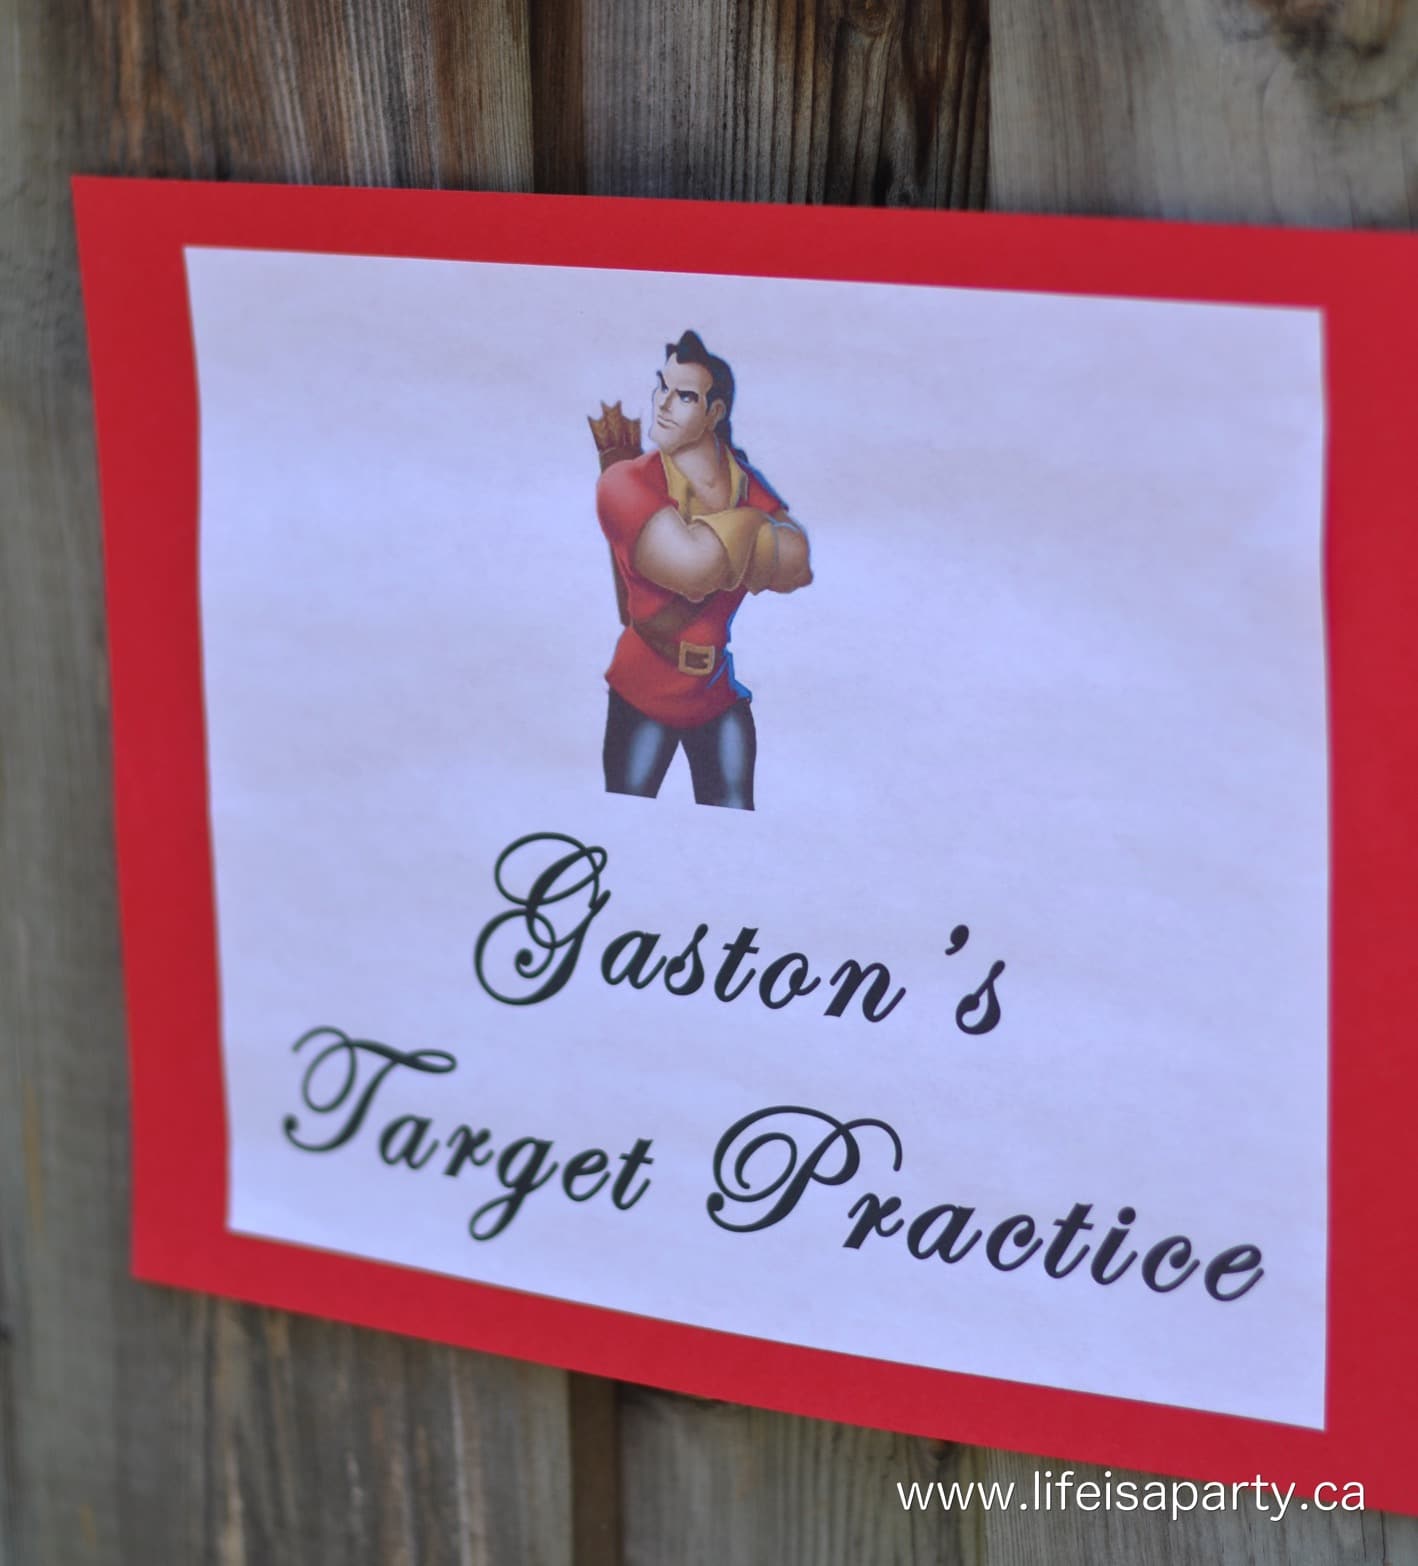 Gaston's Target Practice sign